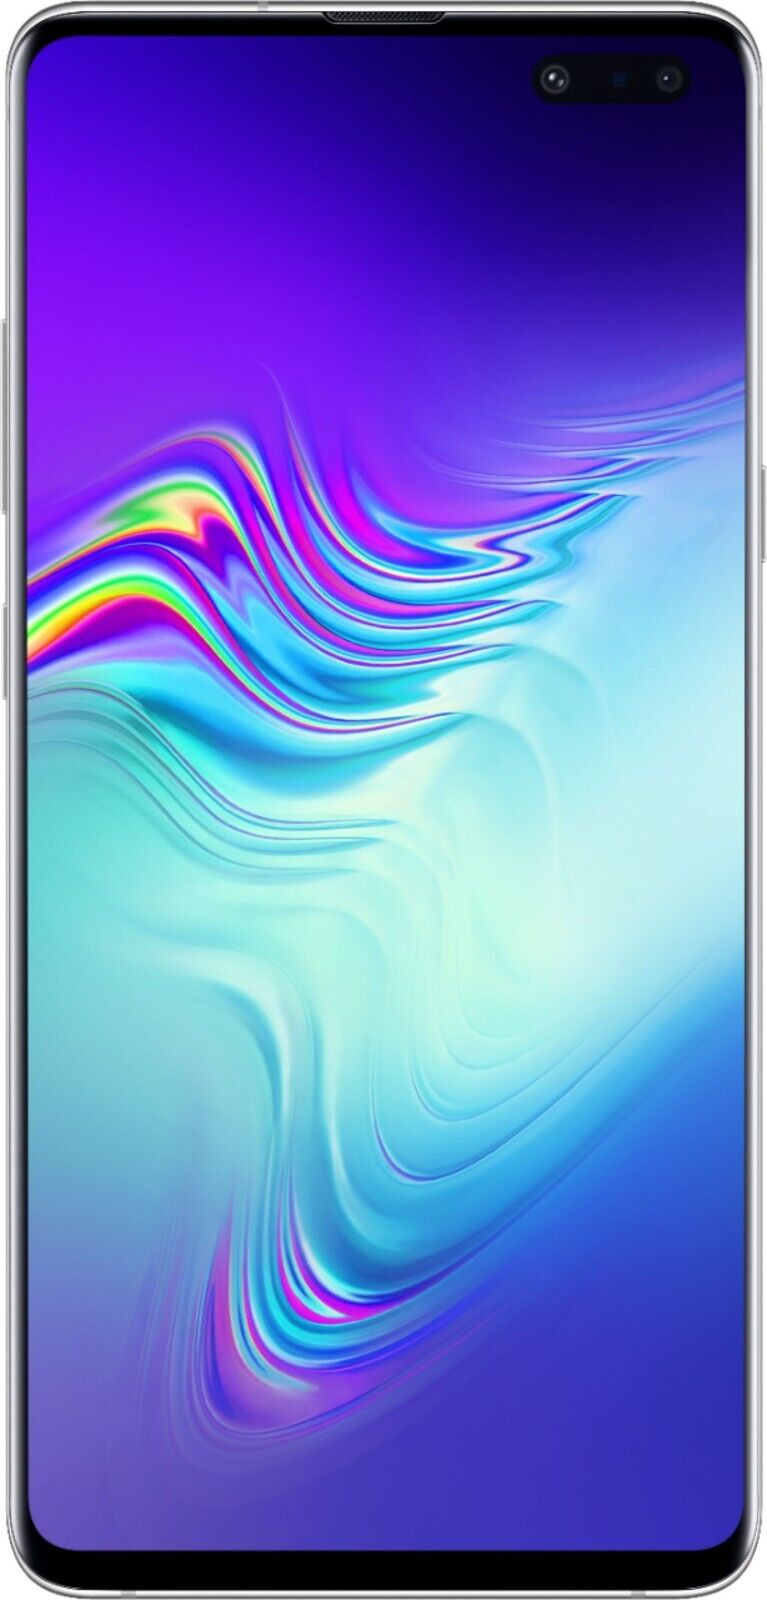 Galaxy S10 5G 256GB - Crown Silver - Locked Verizon